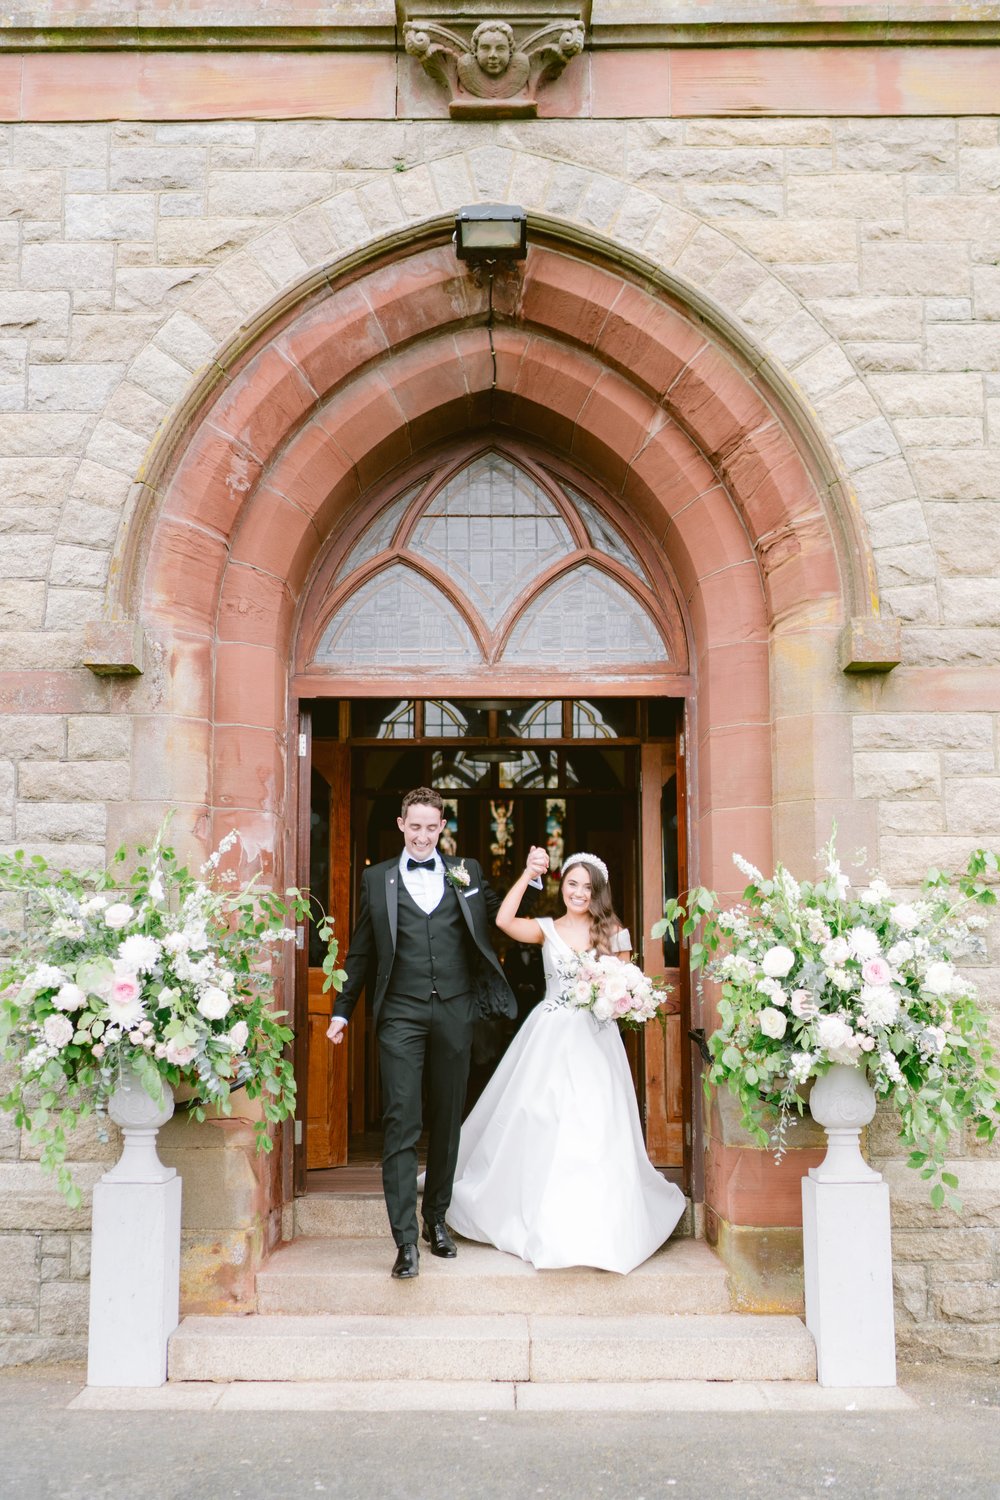 Darver Castle wedding, wedding photographer Ireland, Northern Ireland wedding venue, castle wedding venue, Hello Sugar Photography (70).jpg